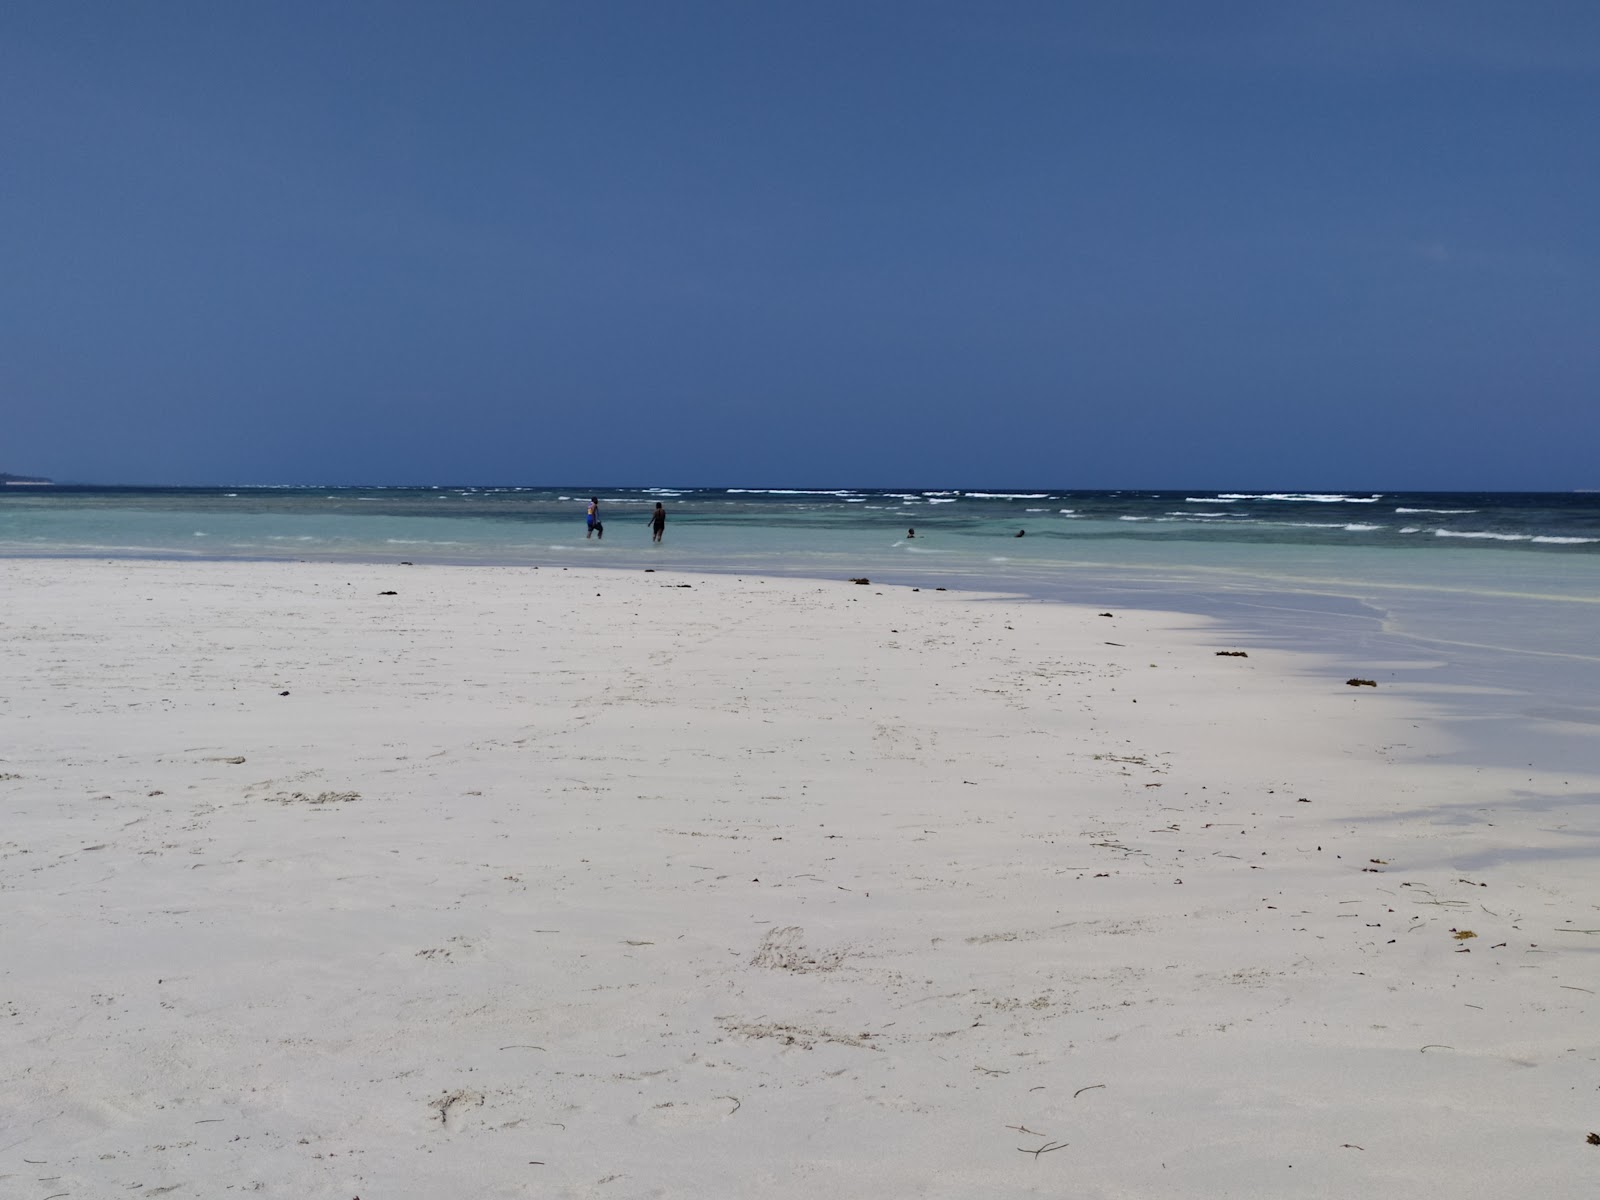 Foto de Galu Kinondo Beach - lugar popular entre os apreciadores de relaxamento